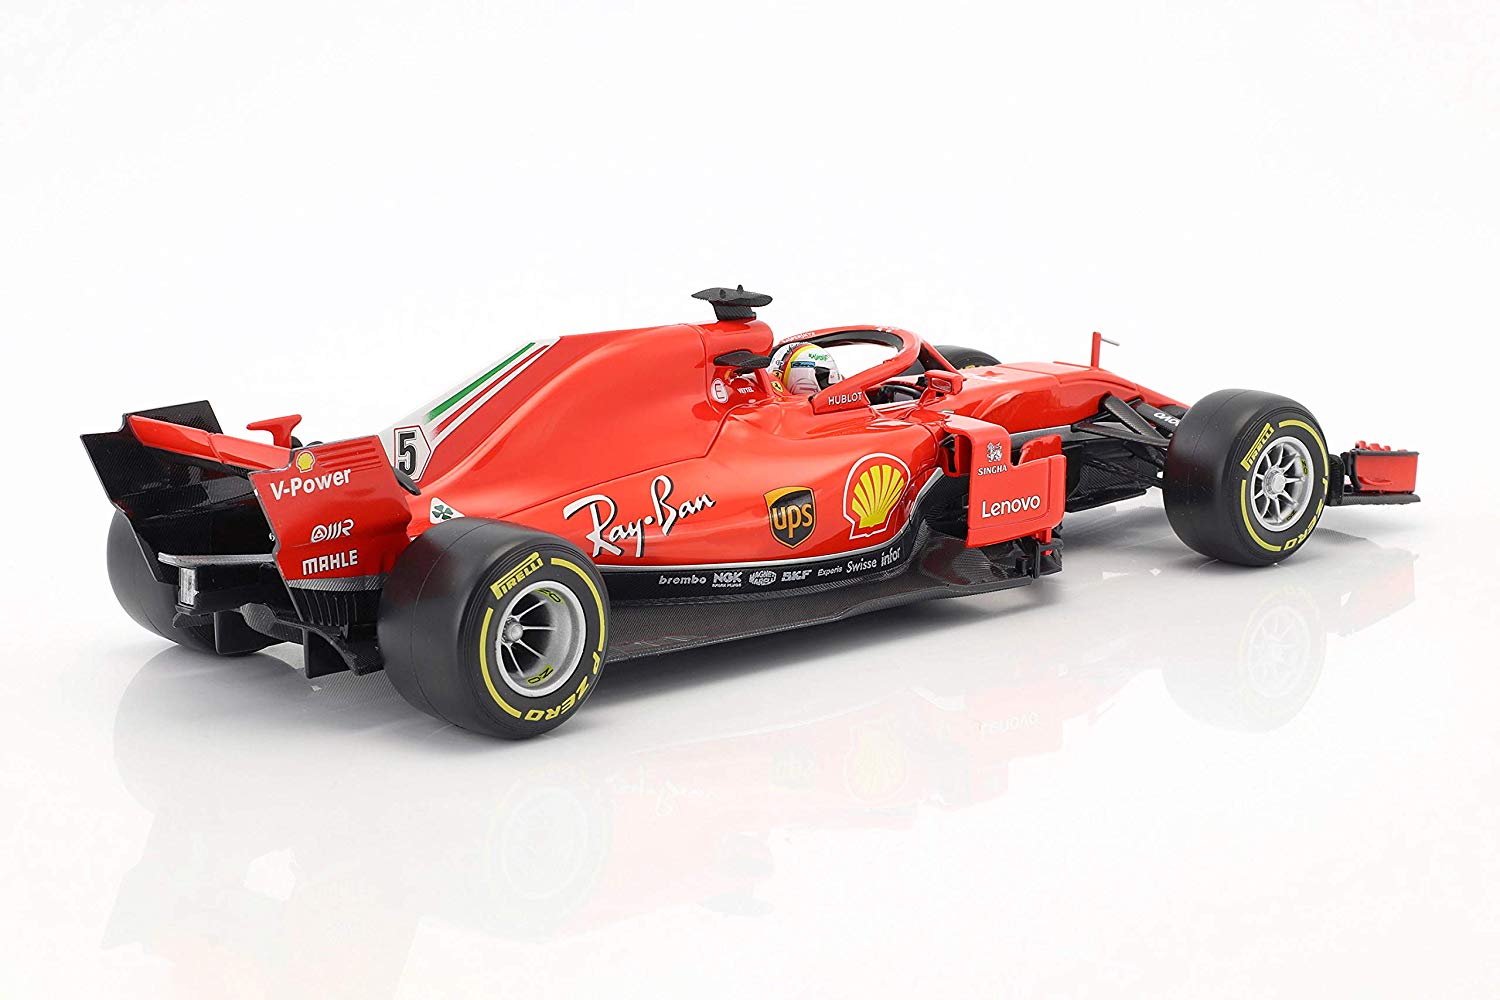 Ferrari F1 2018 SF71H - vettel